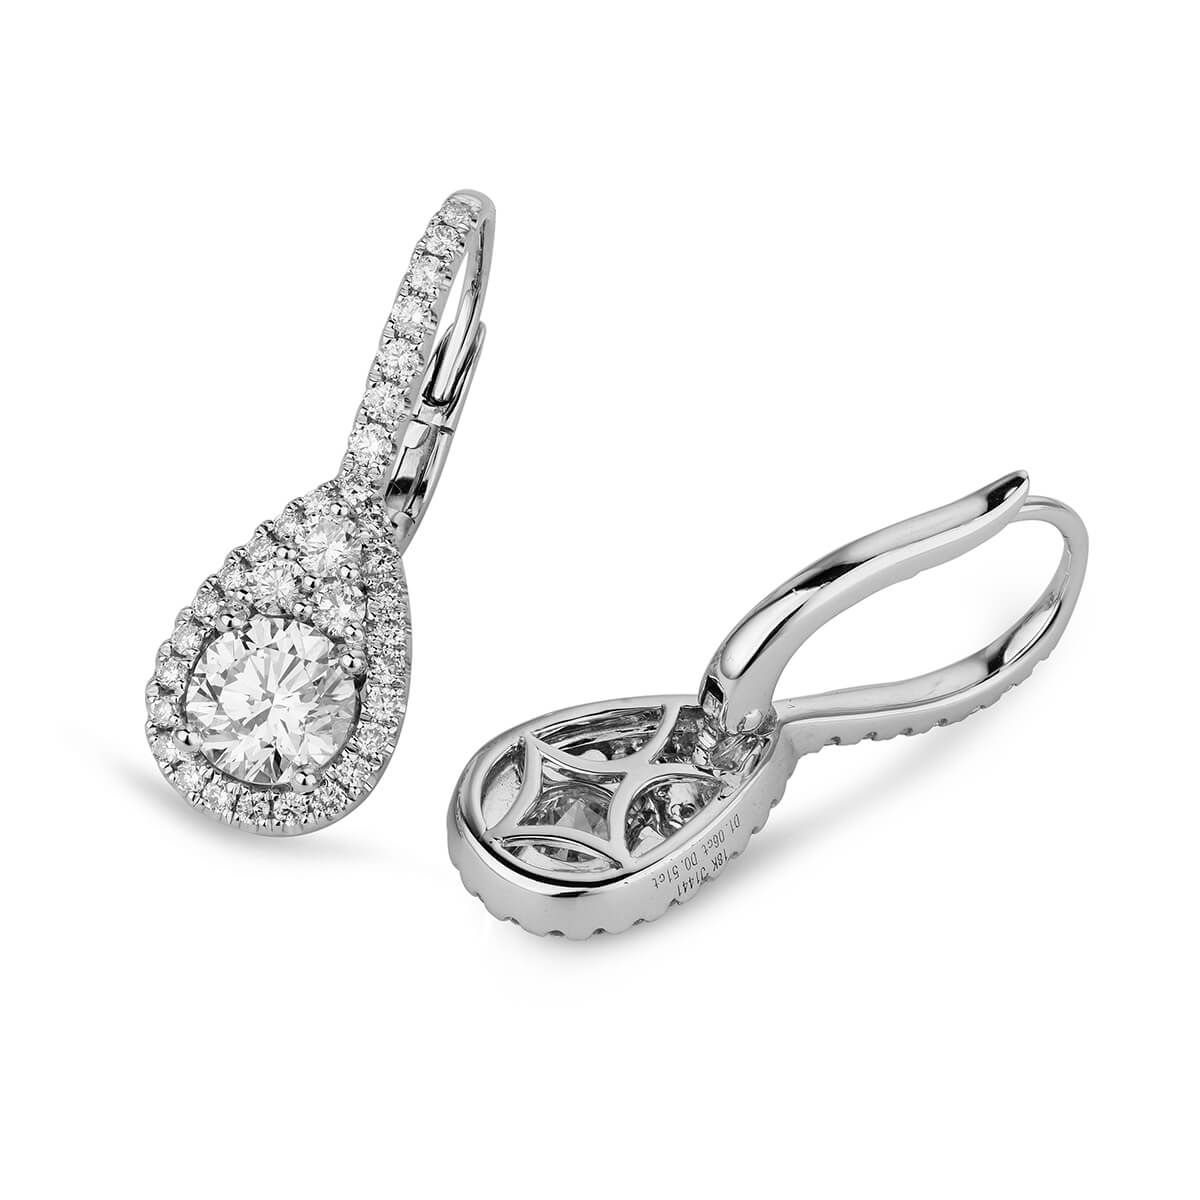  White Diamond Earrings, 1.06 Ct. (1.57 Ct. TW), Round shape, ZSX Certified, 88867069469312